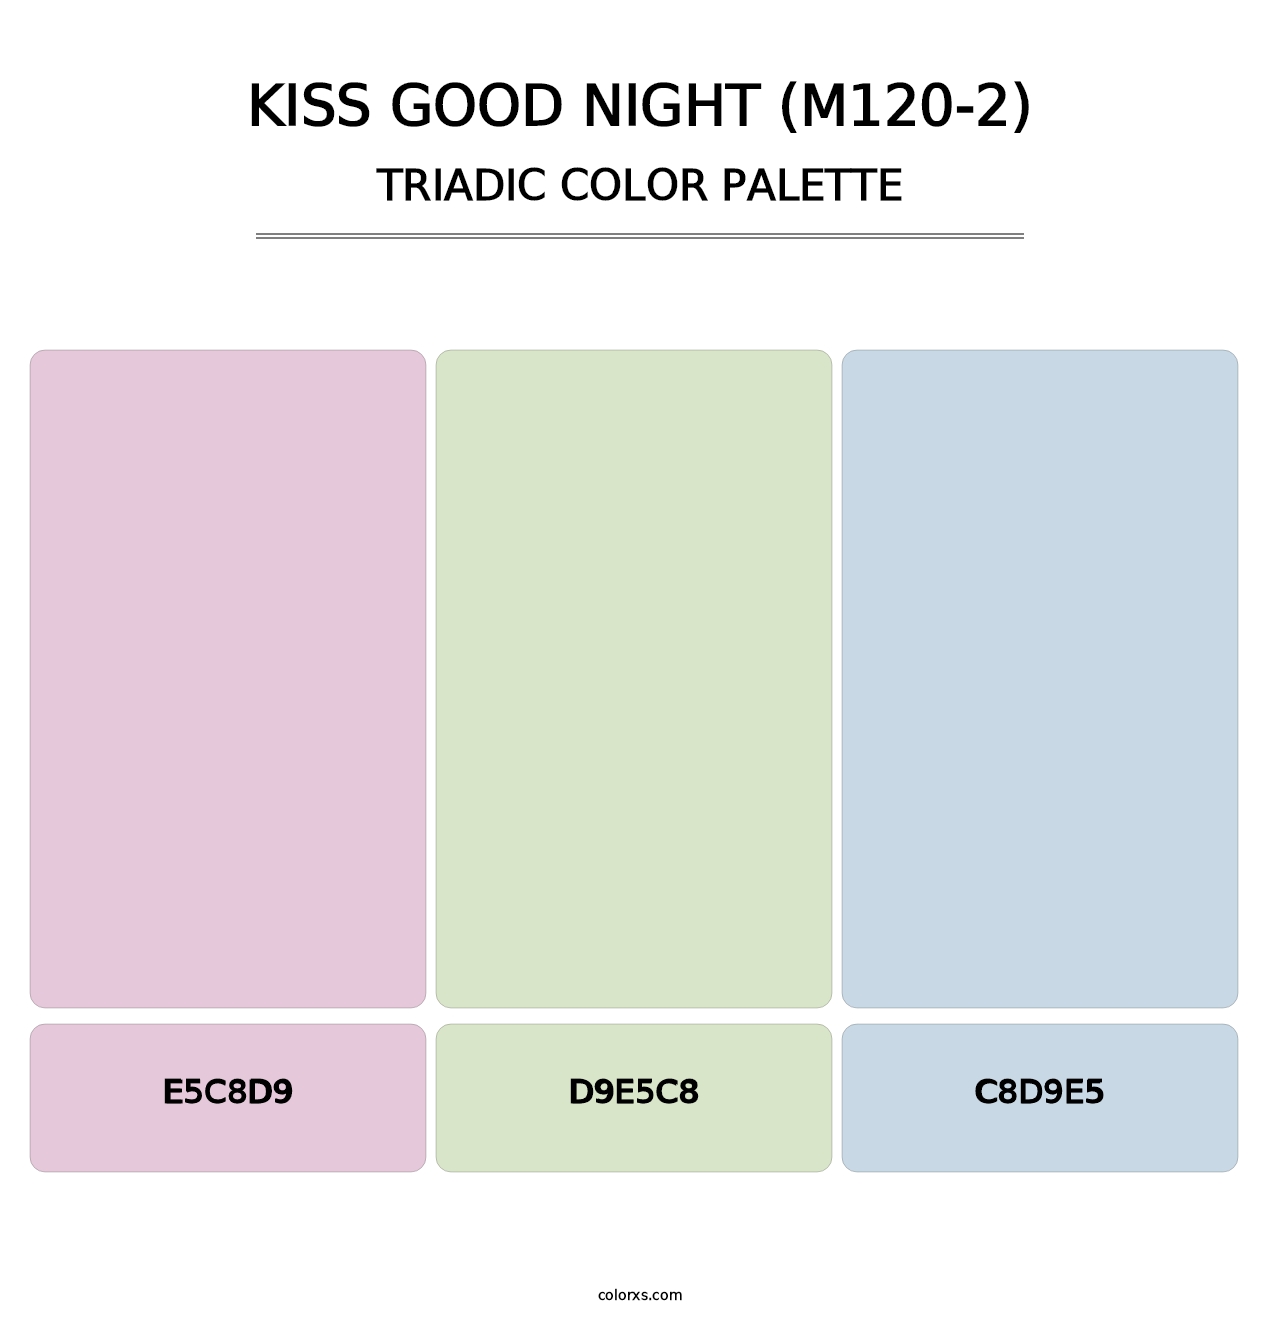 Kiss Good Night (M120-2) - Triadic Color Palette